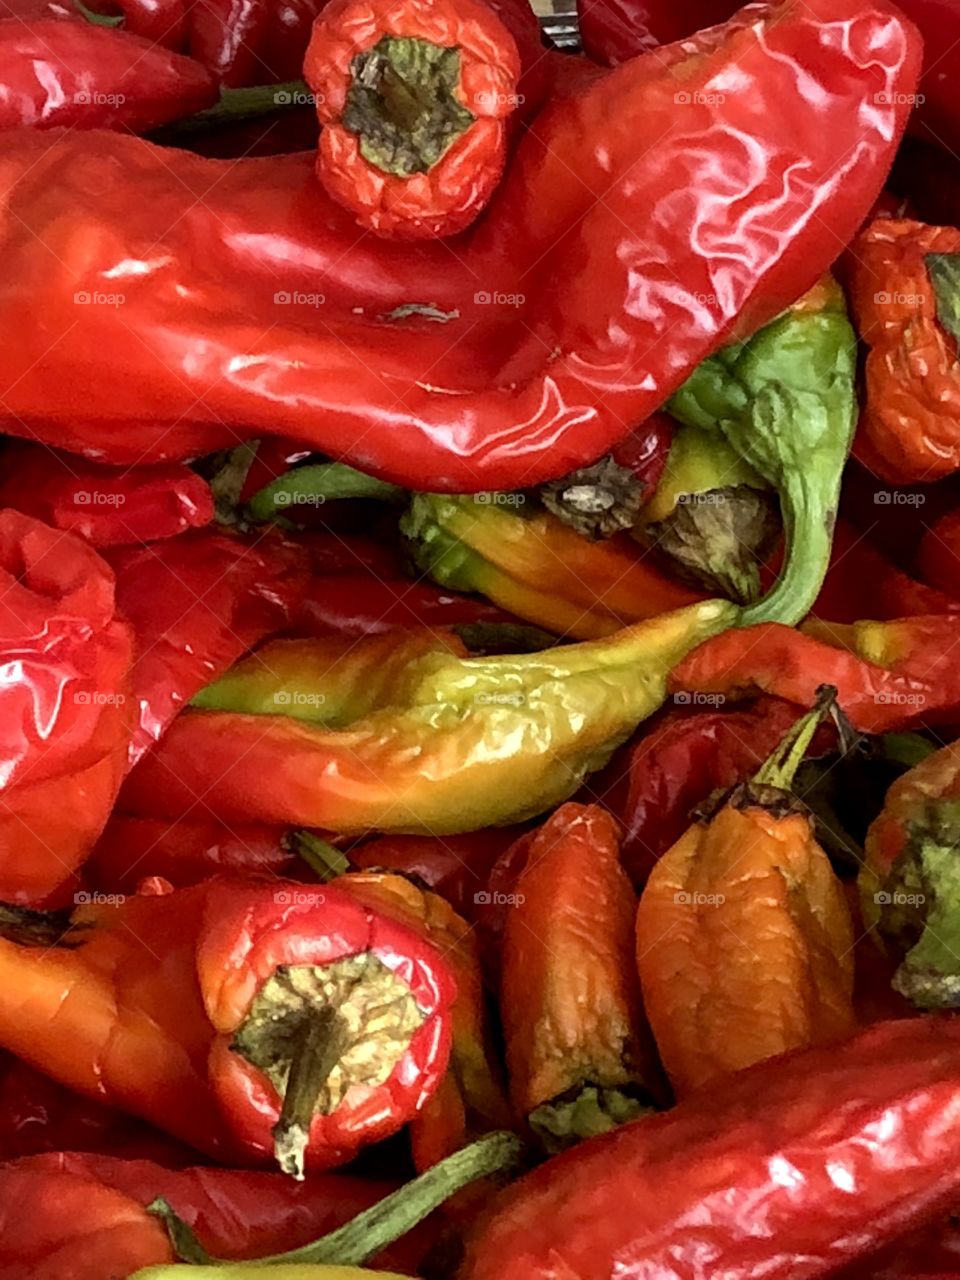 Colorado chili peppers